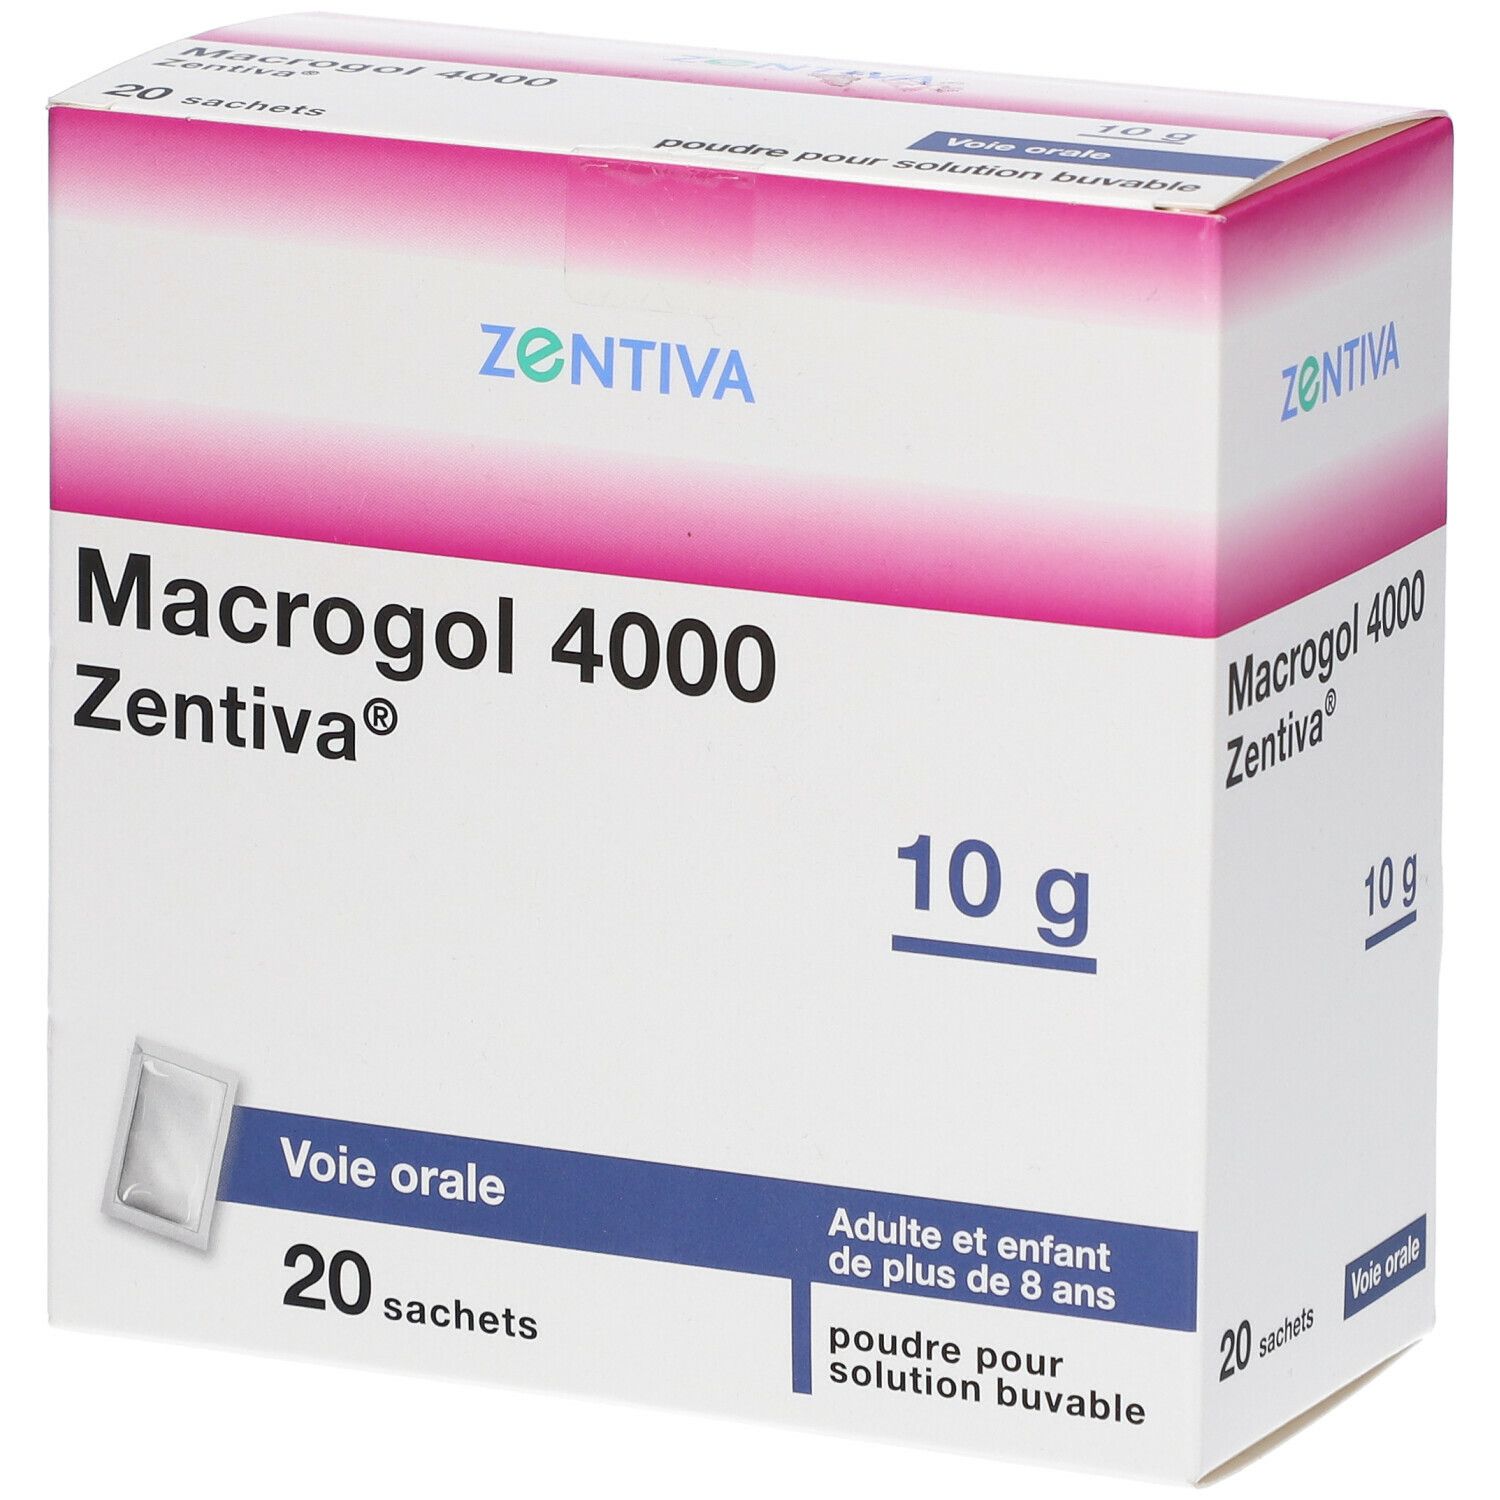 Macrogol 4000 Zentiva® 10 g